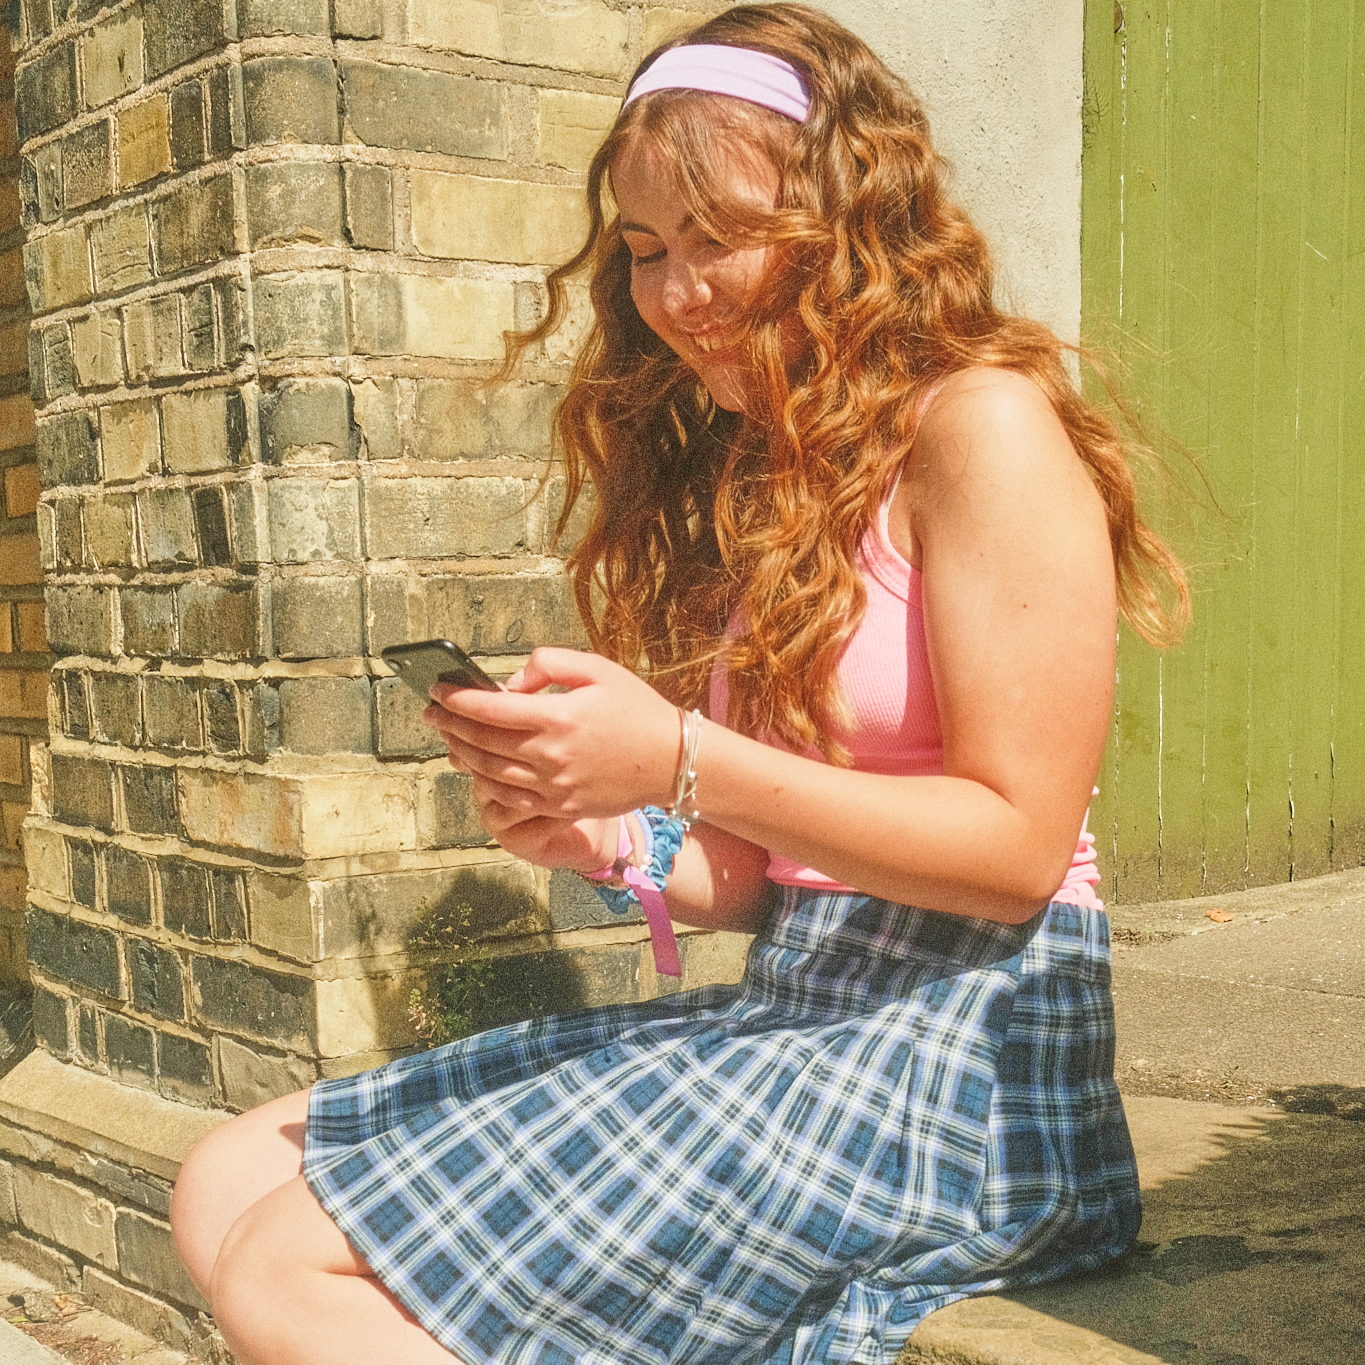 Smiling teen girl looking at phone